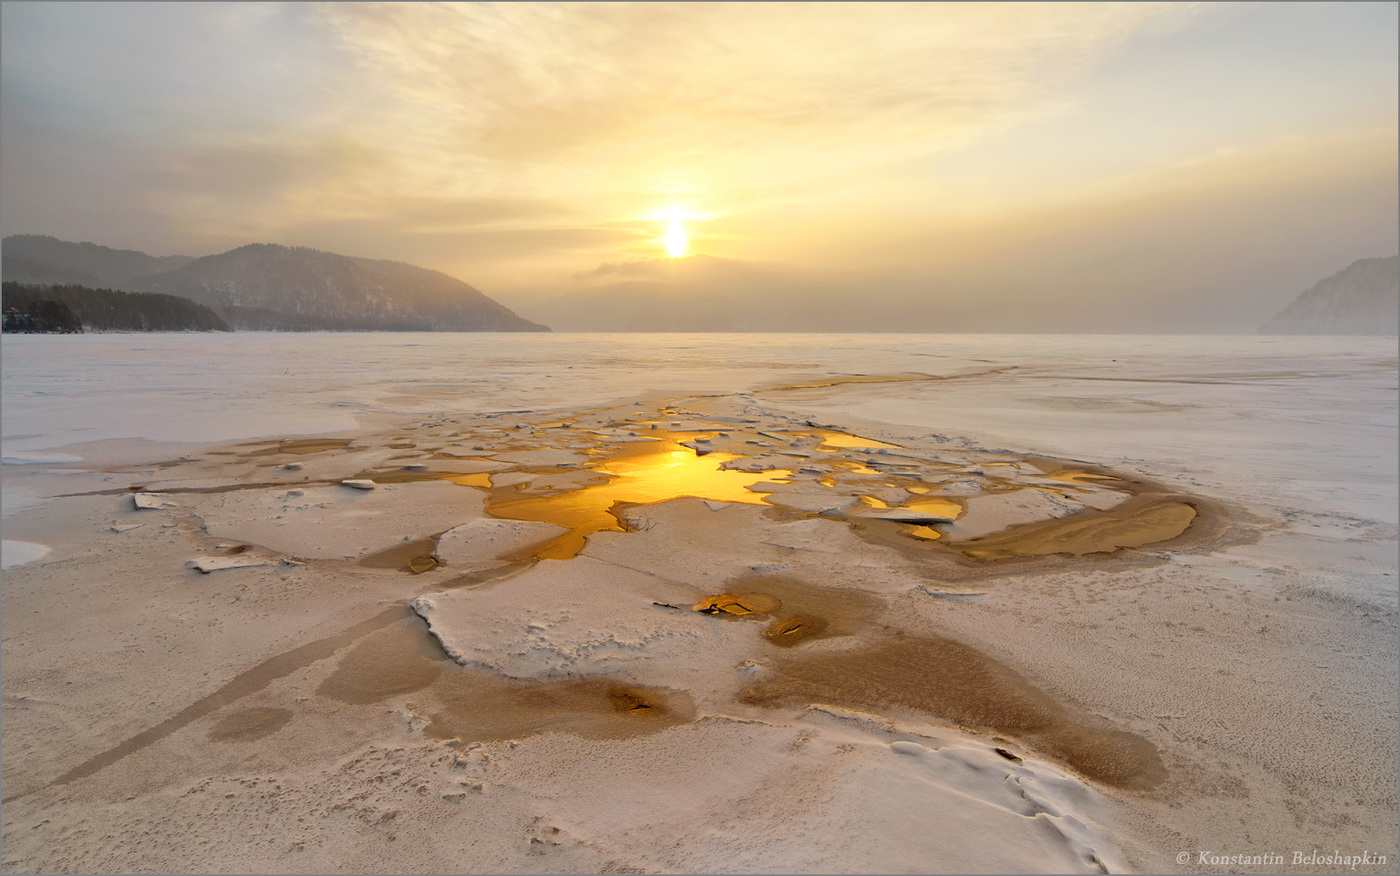 Teletskoye Lake. Altai name Altyn-Kul, which means Golden Lake